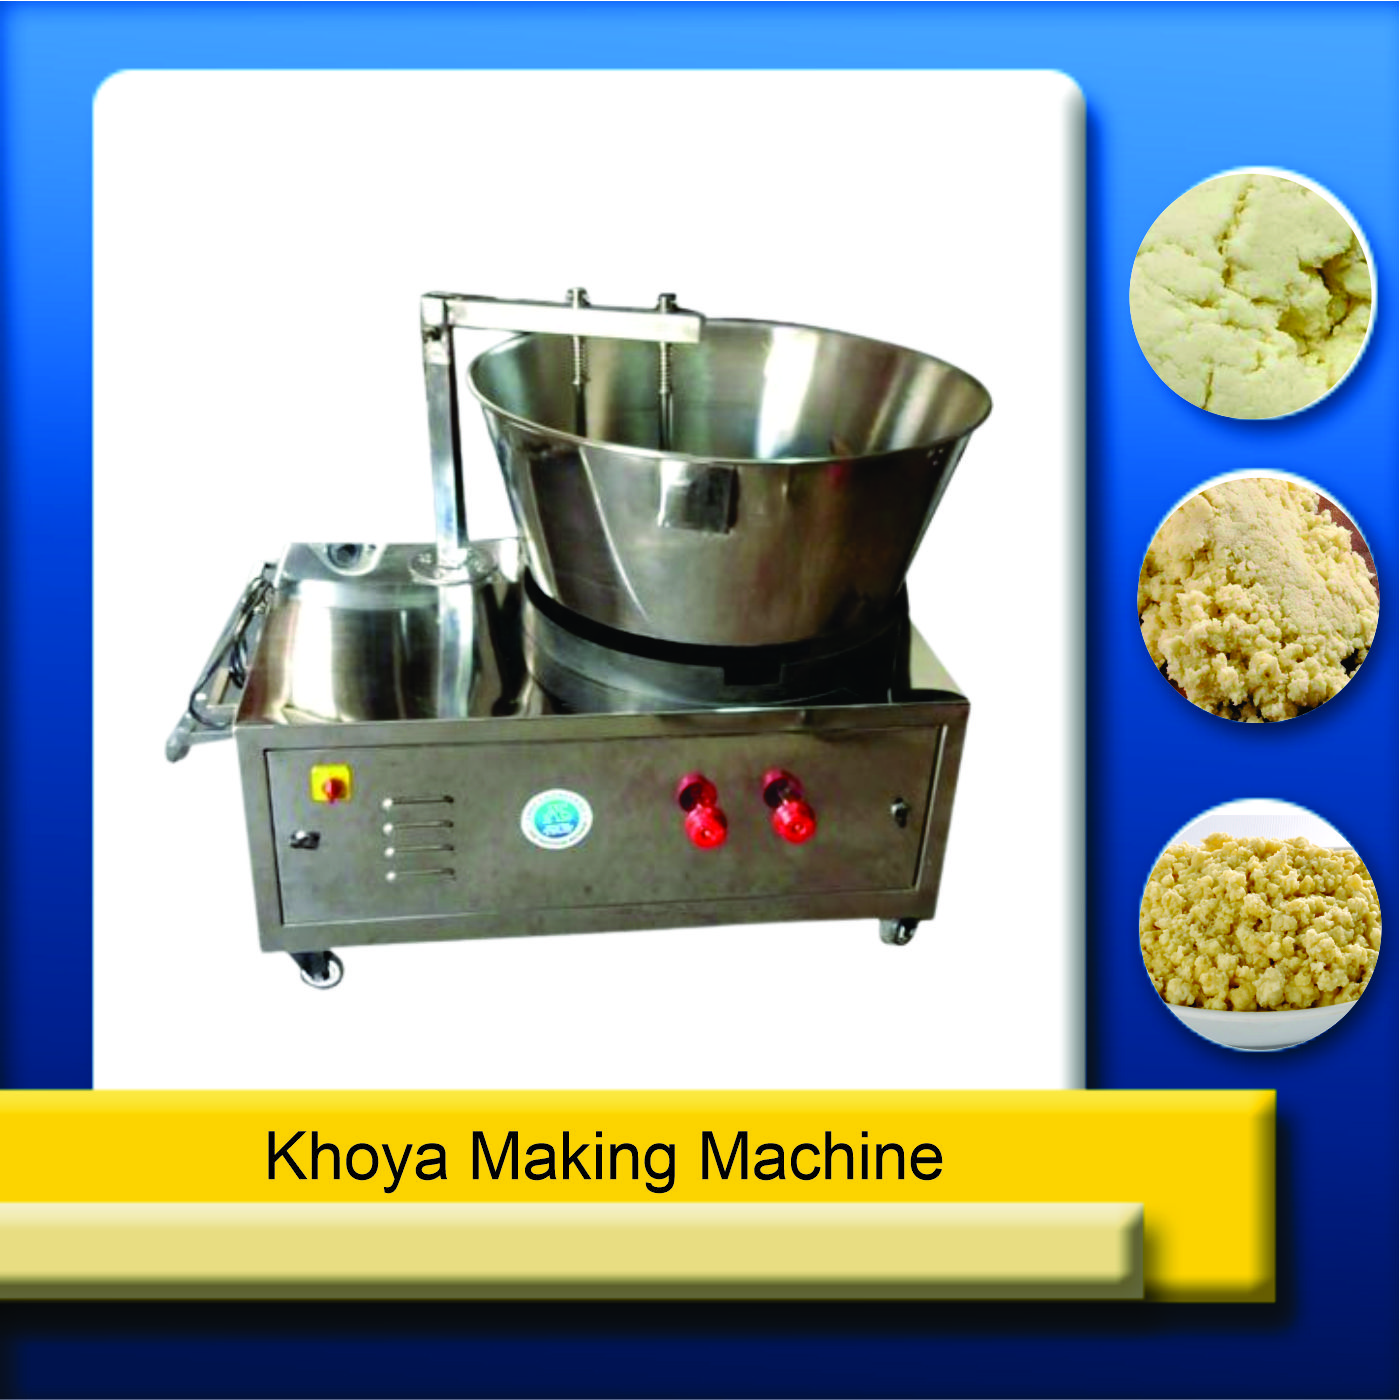 khoya making machine